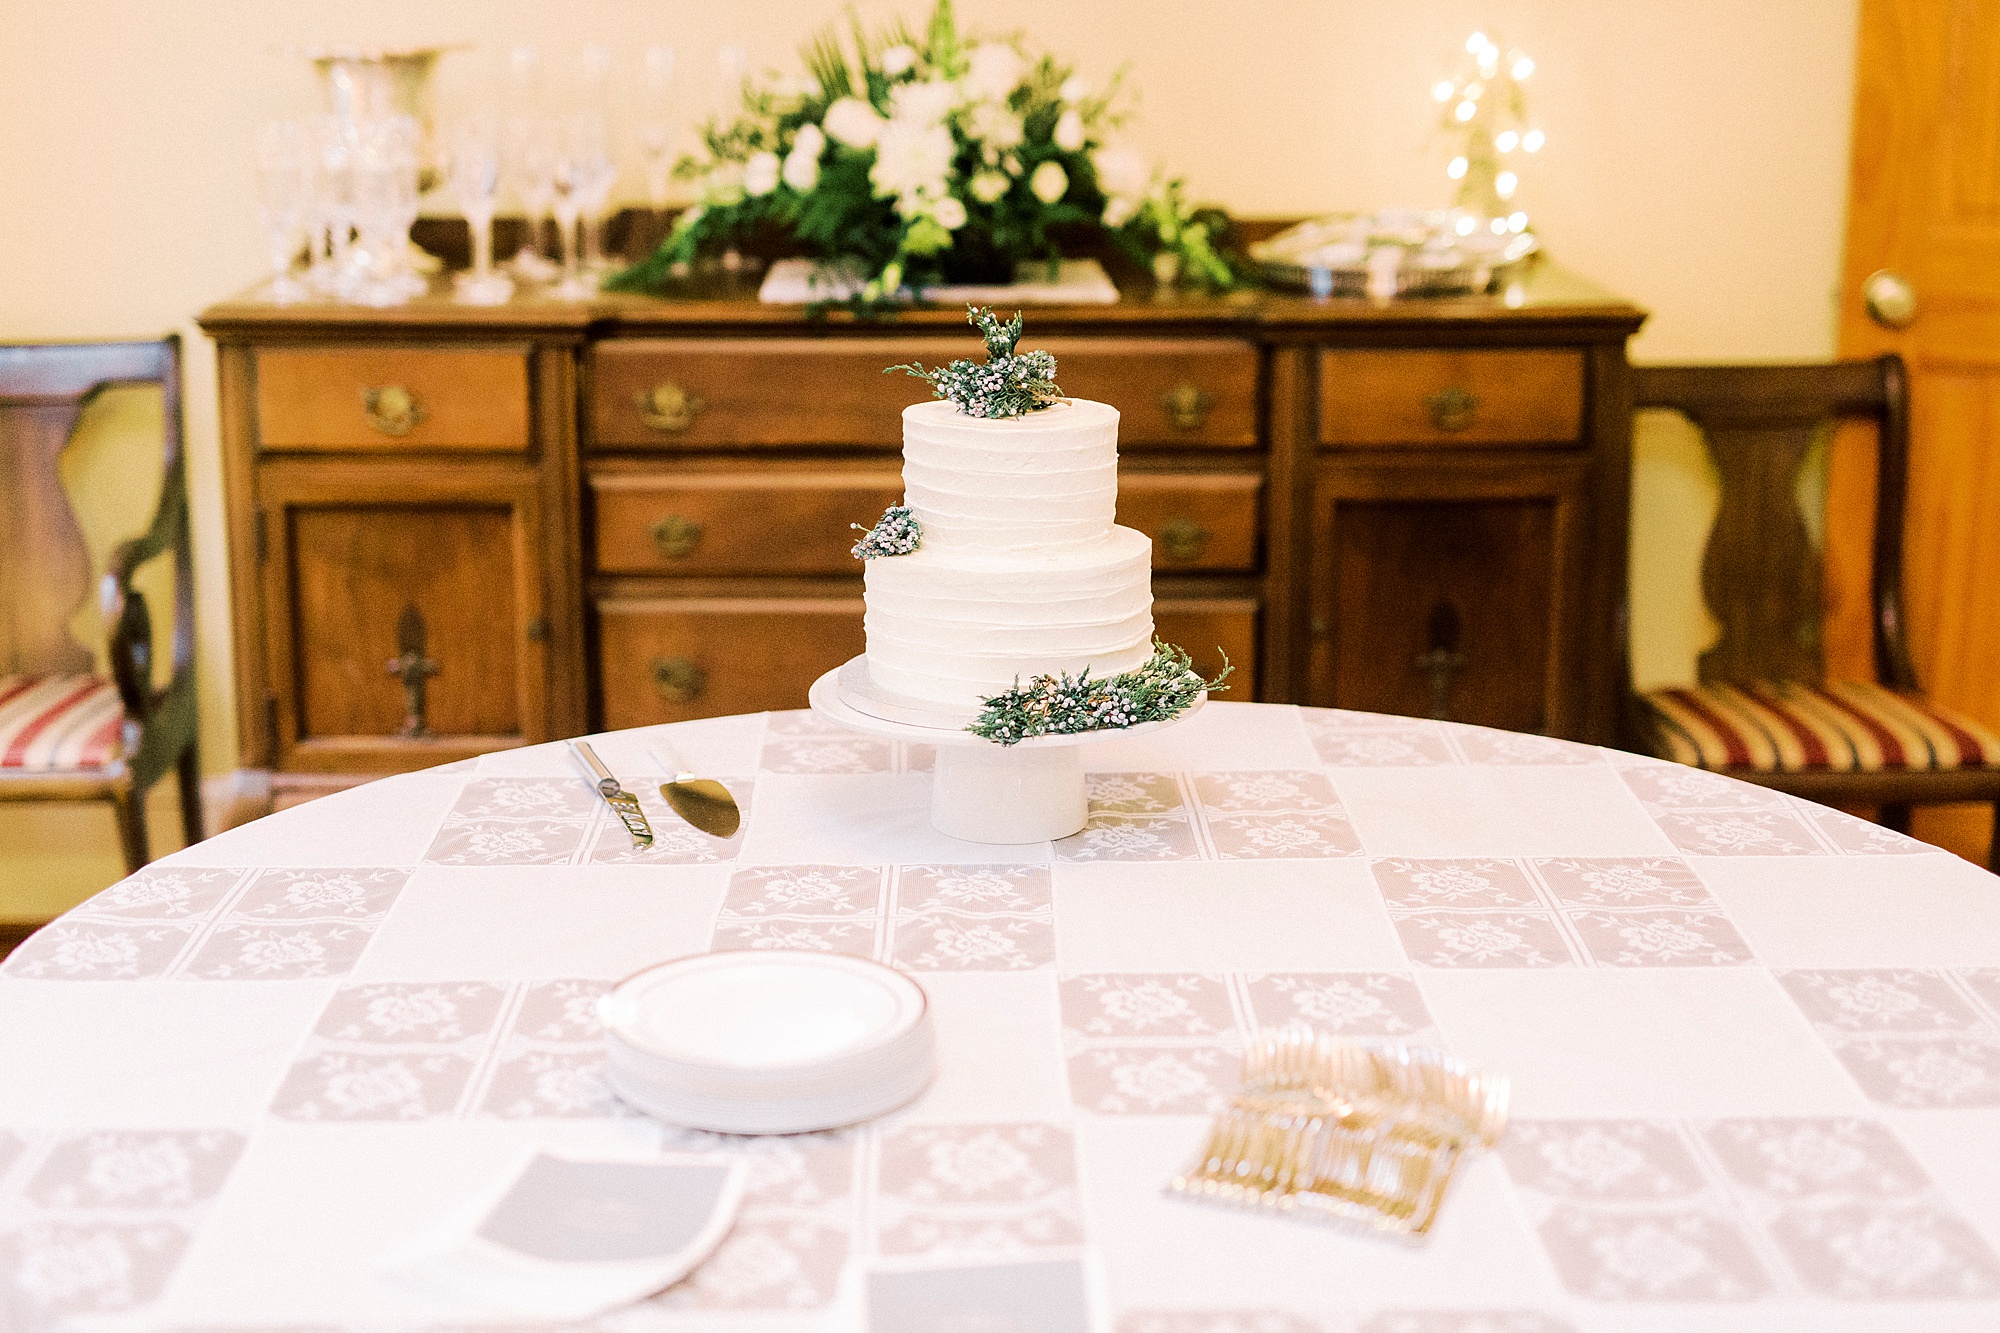 simple wedding cake with greenery